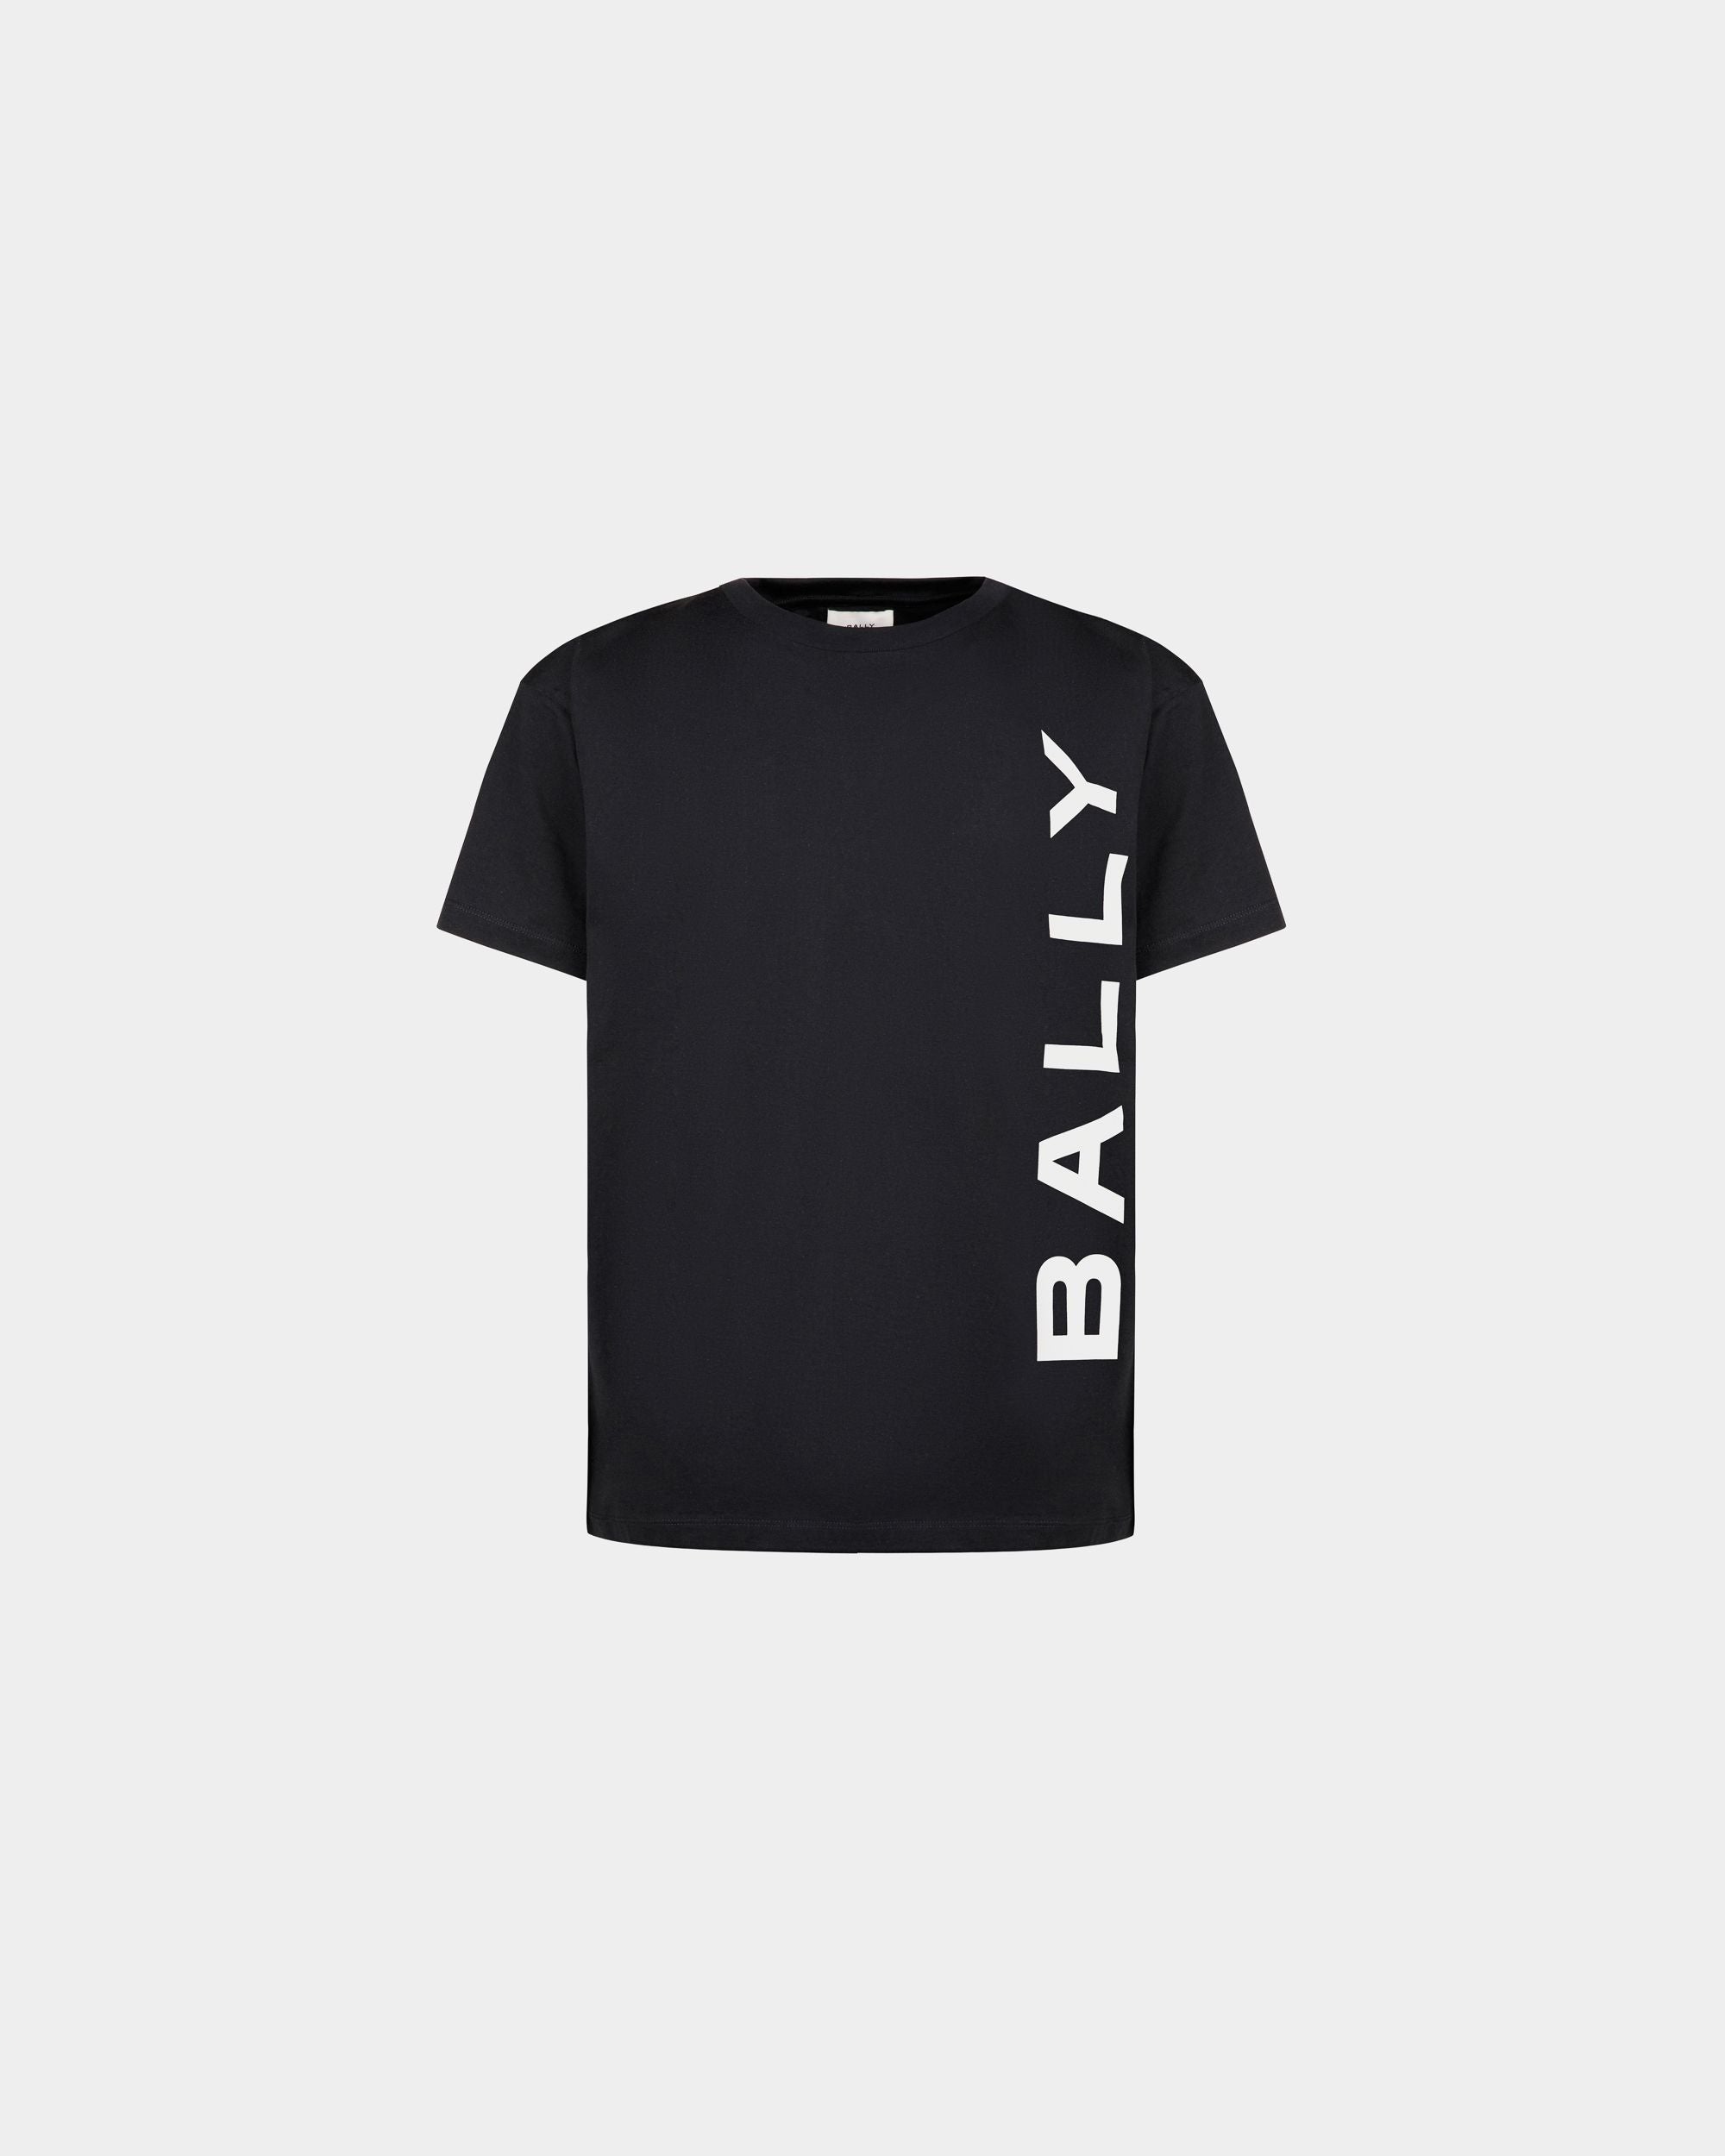 Men's T-Shirt in Navy Blue Cotton | Bally | Still Life Front